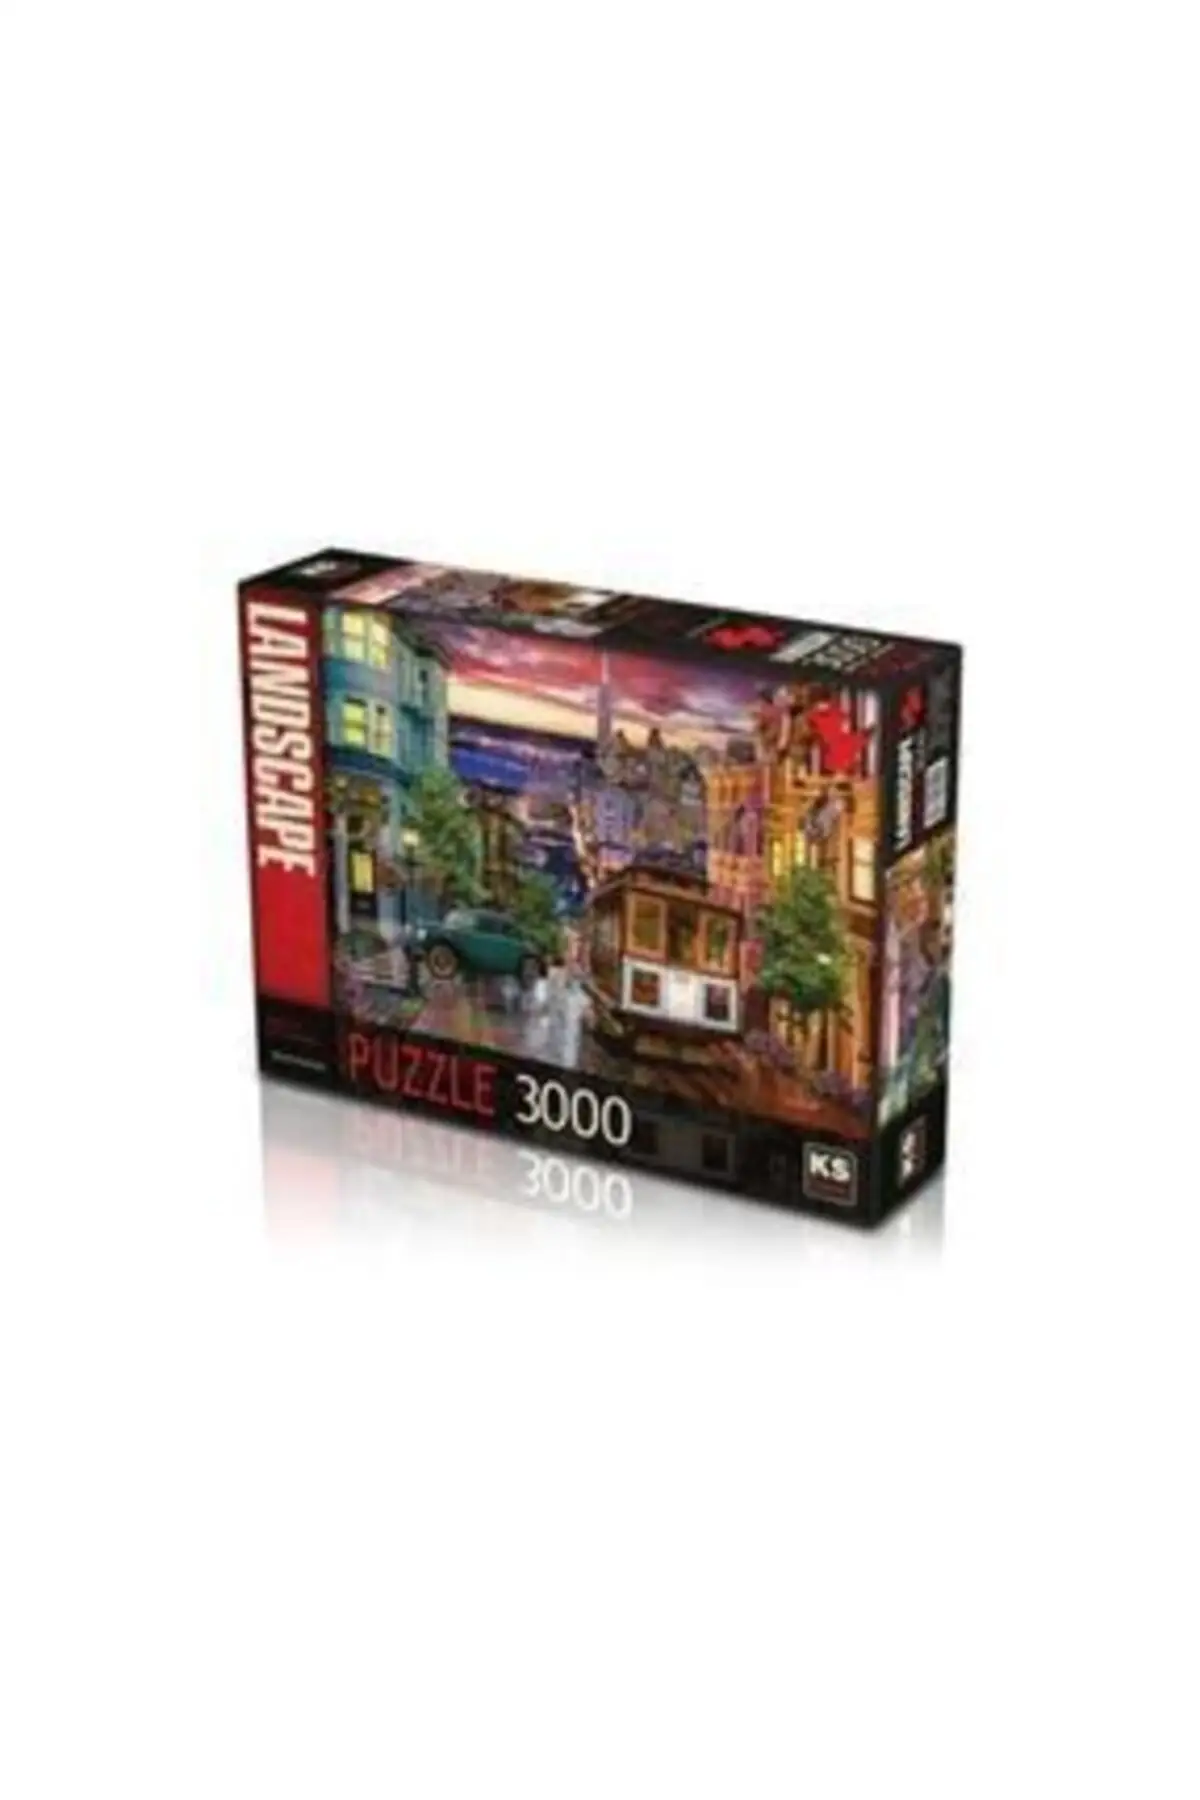 David MacLean Puzzle Niagara Falls 550 24x18 NEW IN BOX 